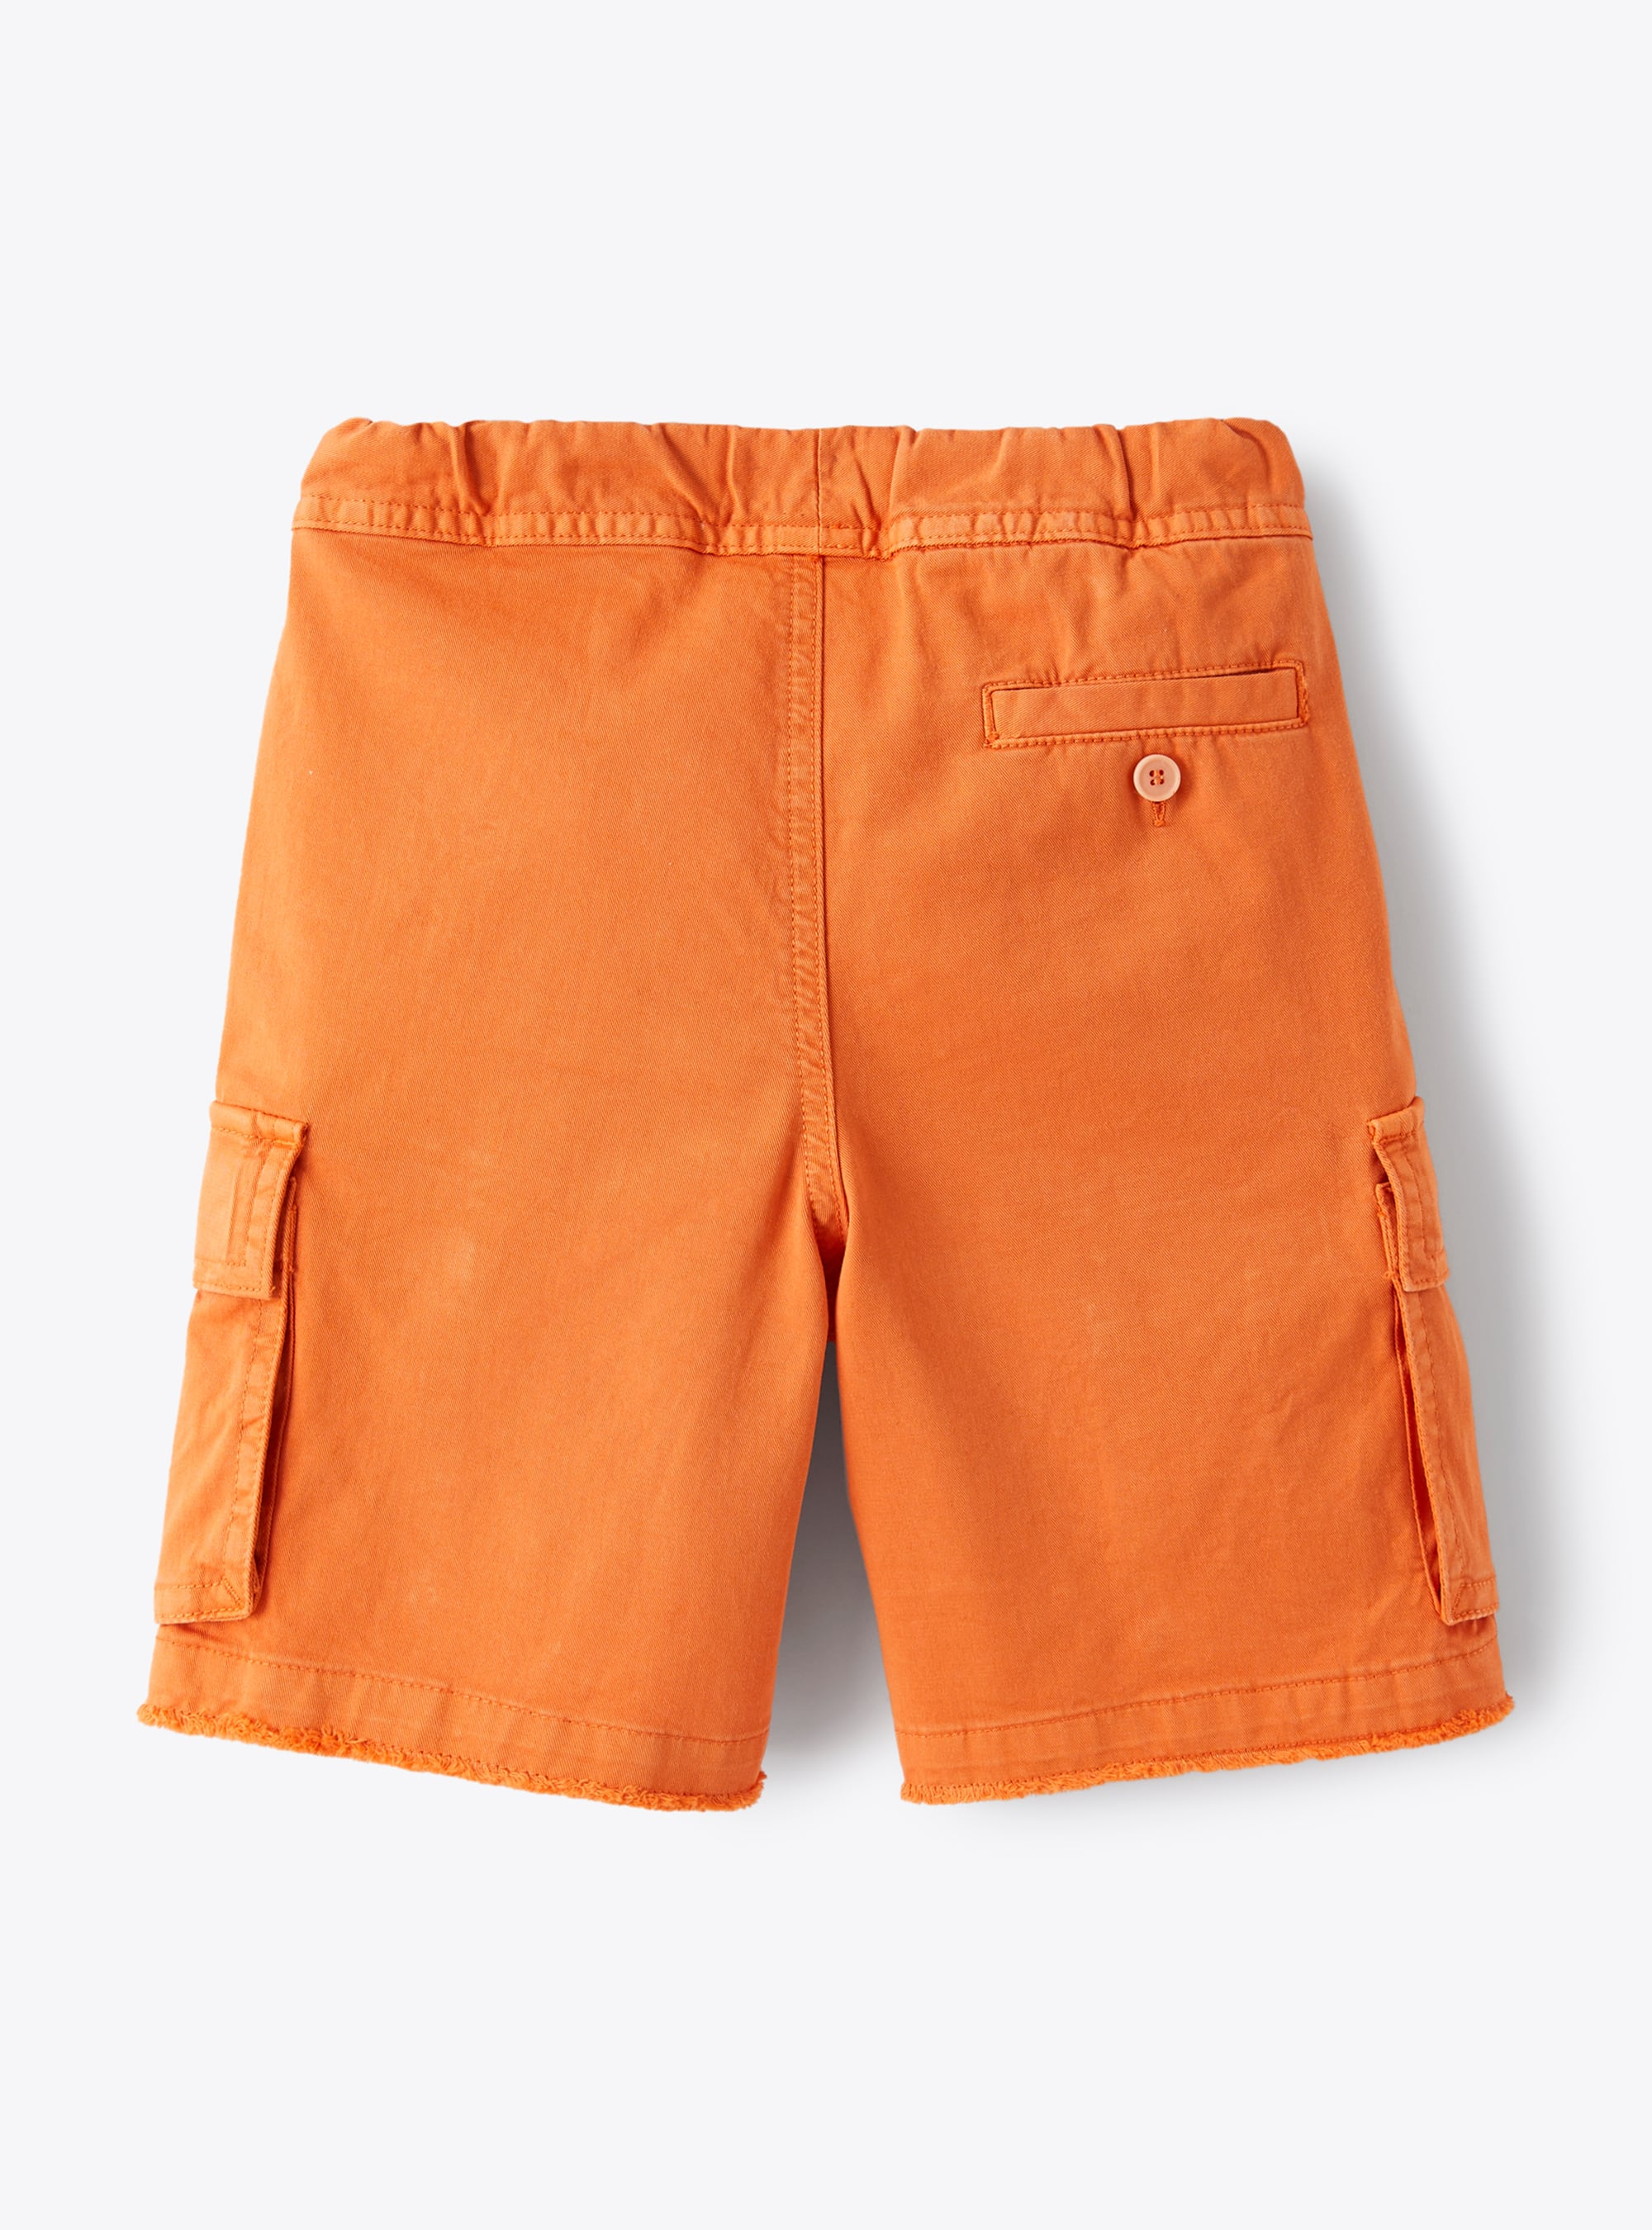 Bermuda shorts in orange gabardine - Orange | Il Gufo